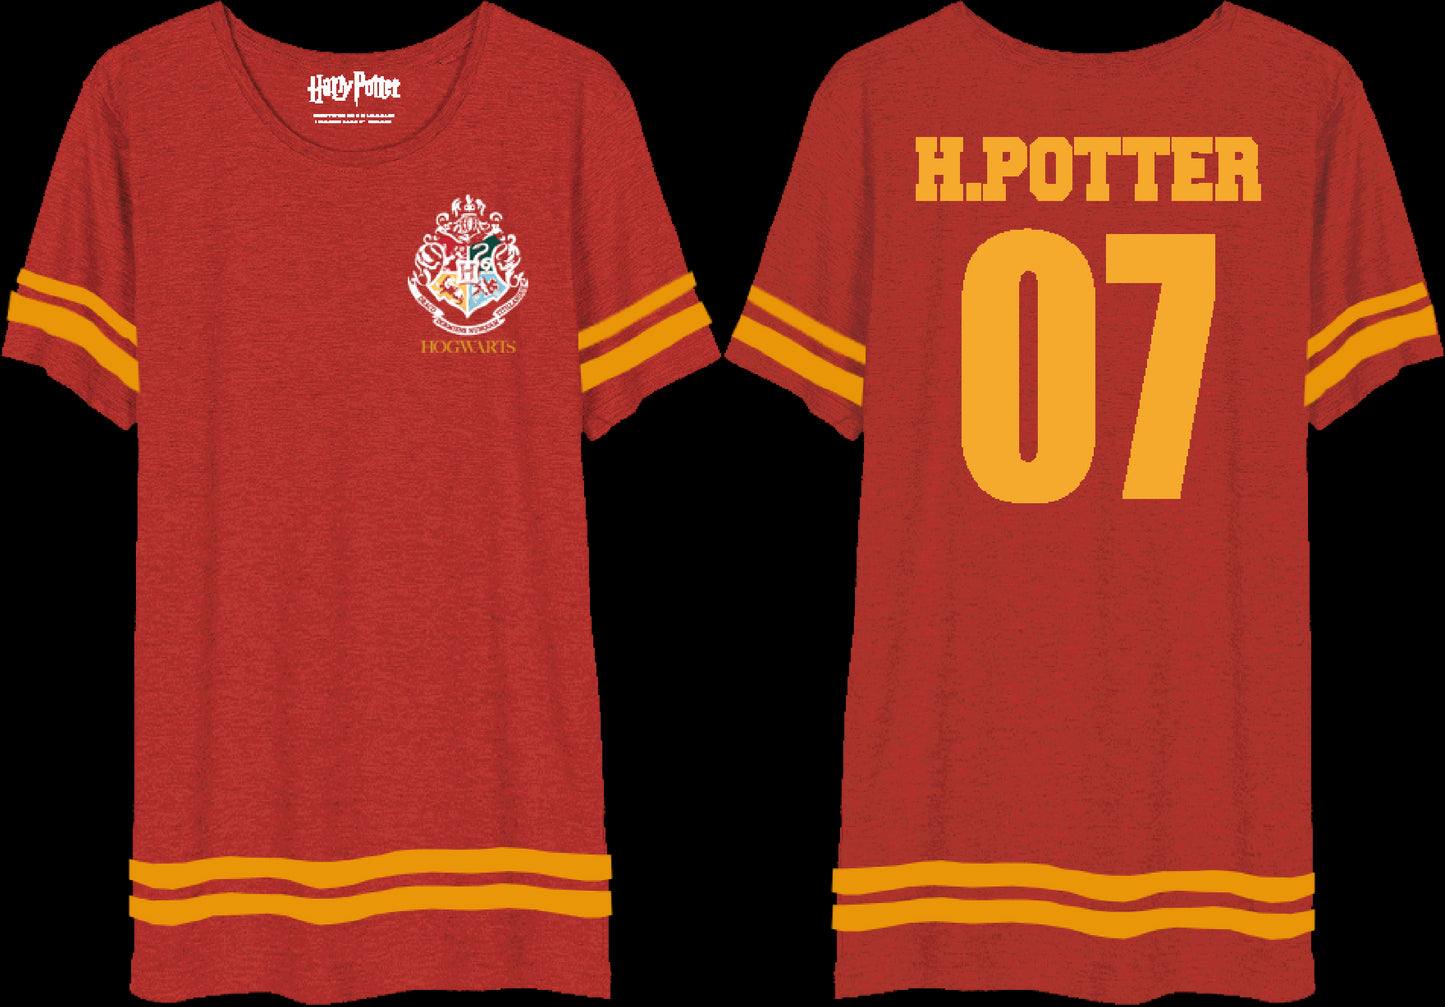 Harry Potter Women's Big T-shirt - Harry Potter College